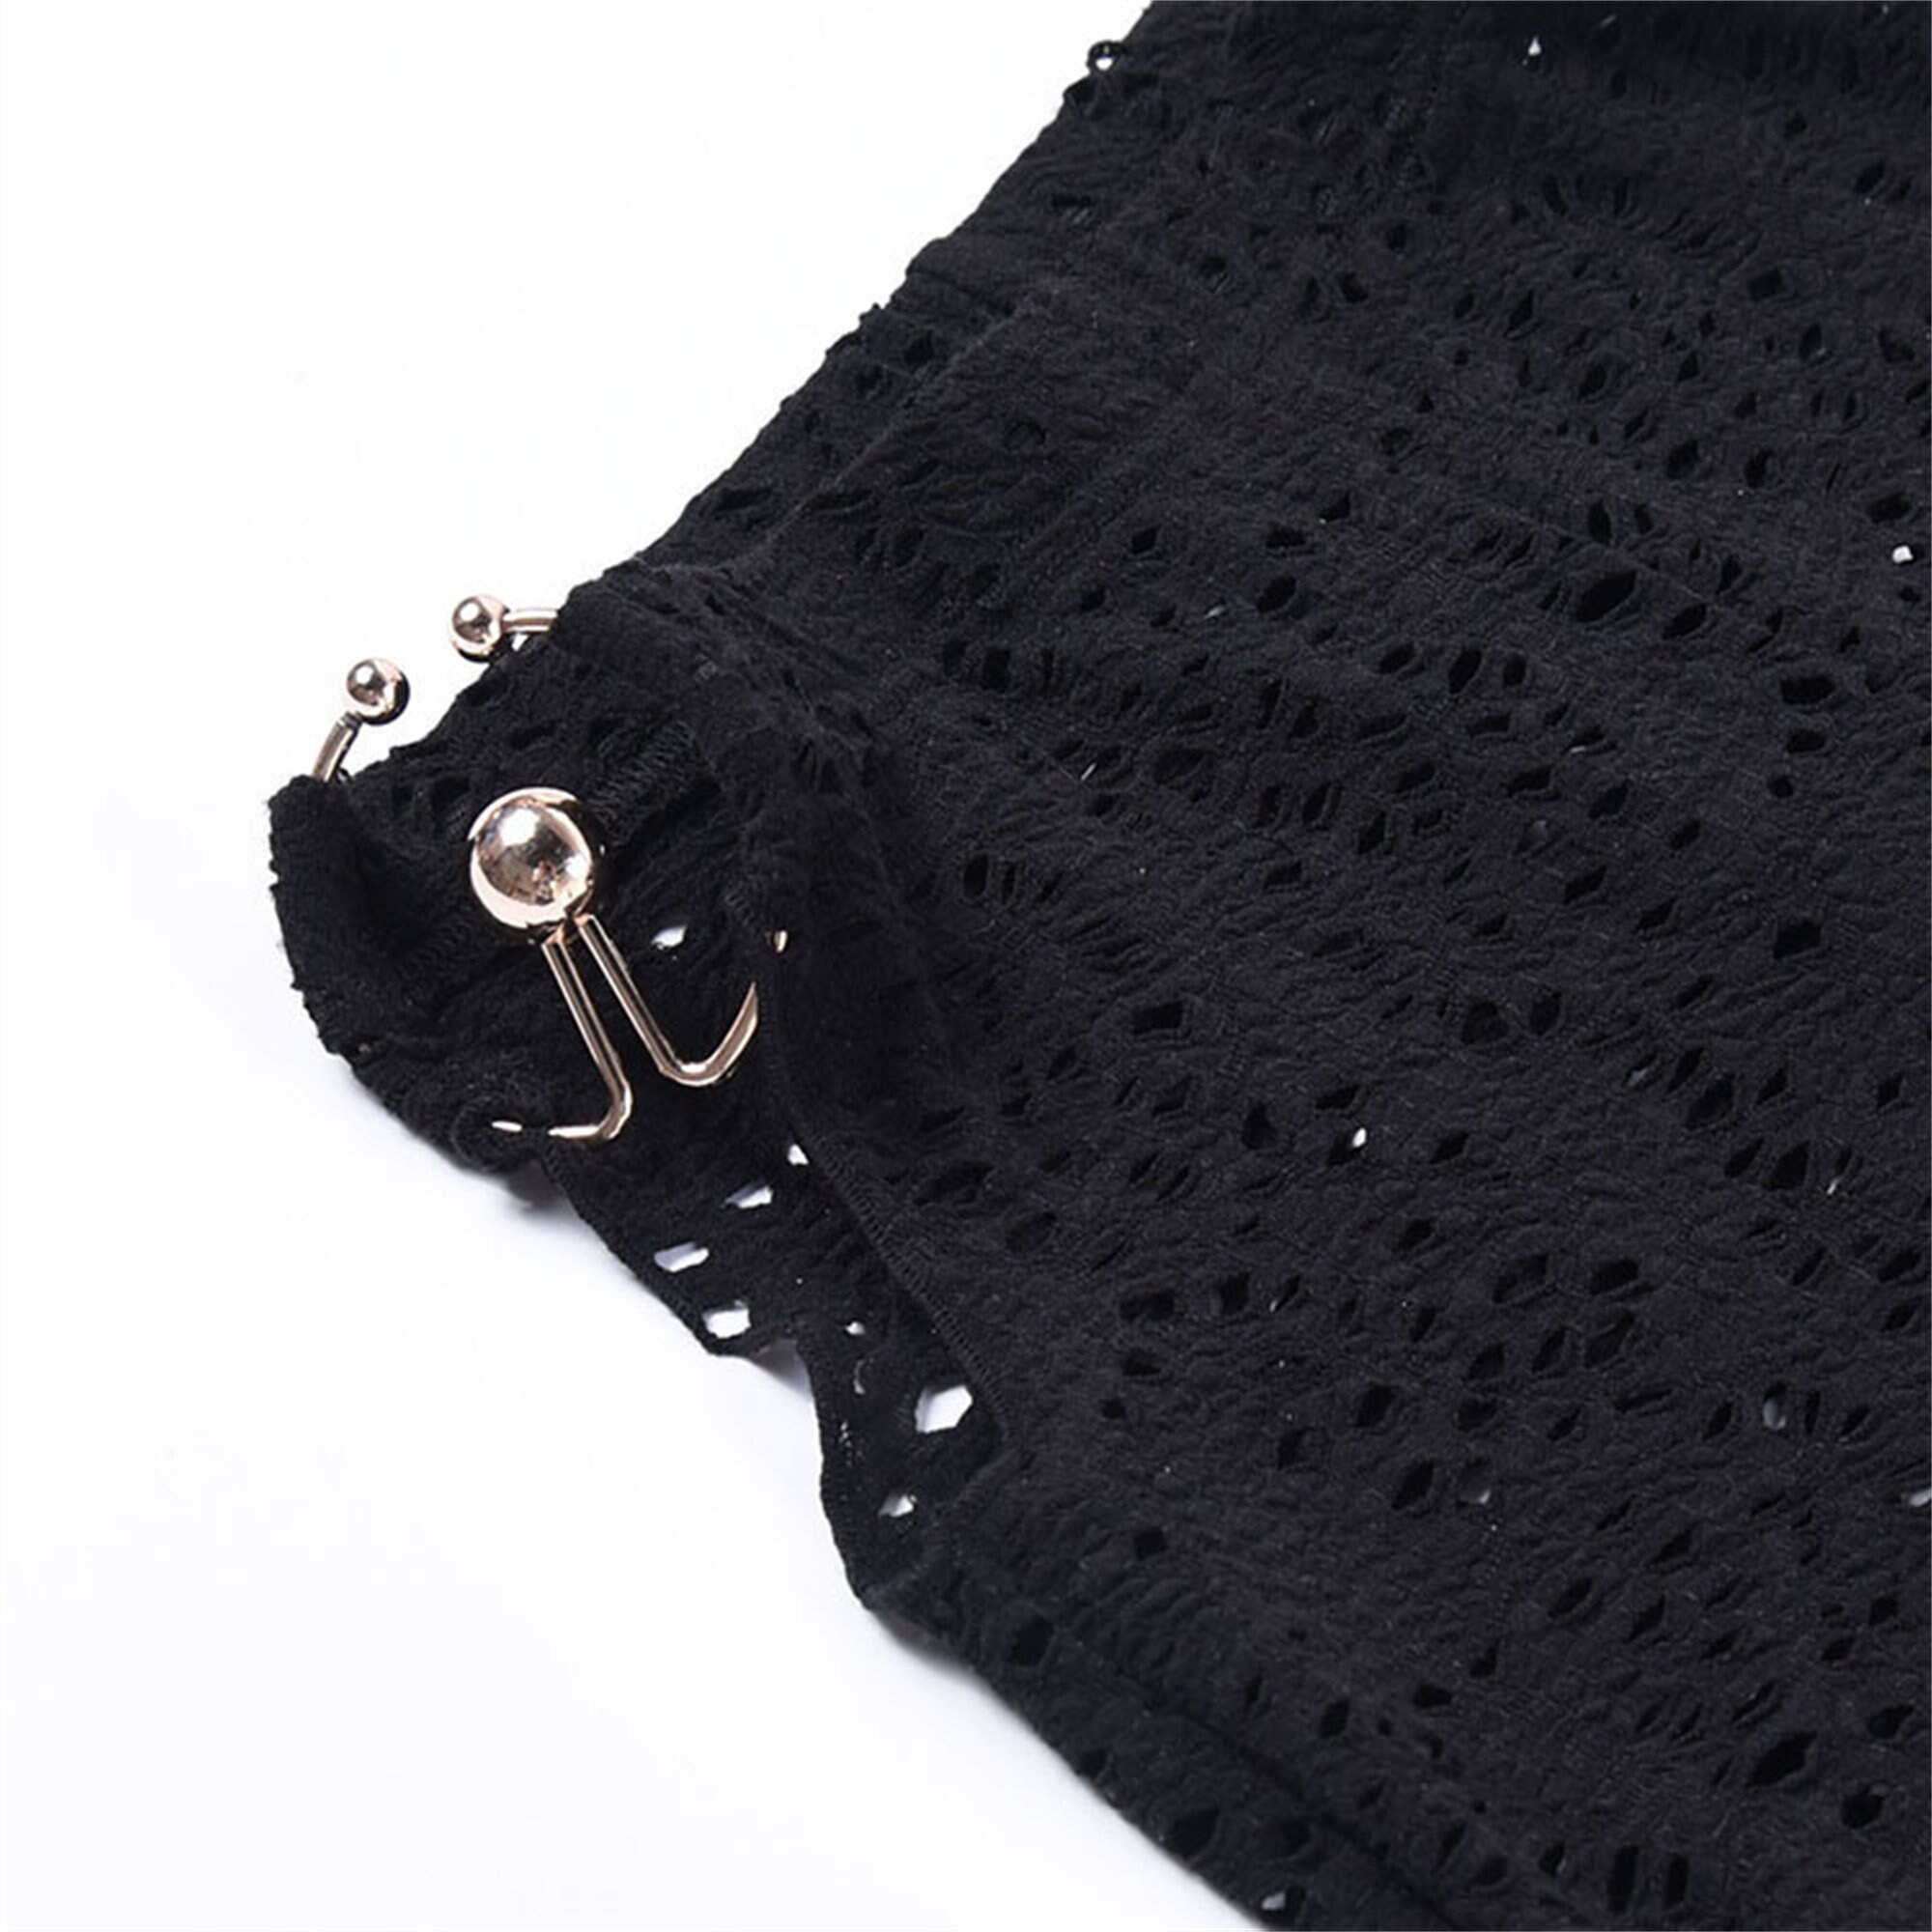 Black High Waist Mesh Flare Gothic Pants Dark Gothic Lace Slacks Sheer Lace And Mesh Shorts Dark Academia Clothing Harajuku Y2k Clothing